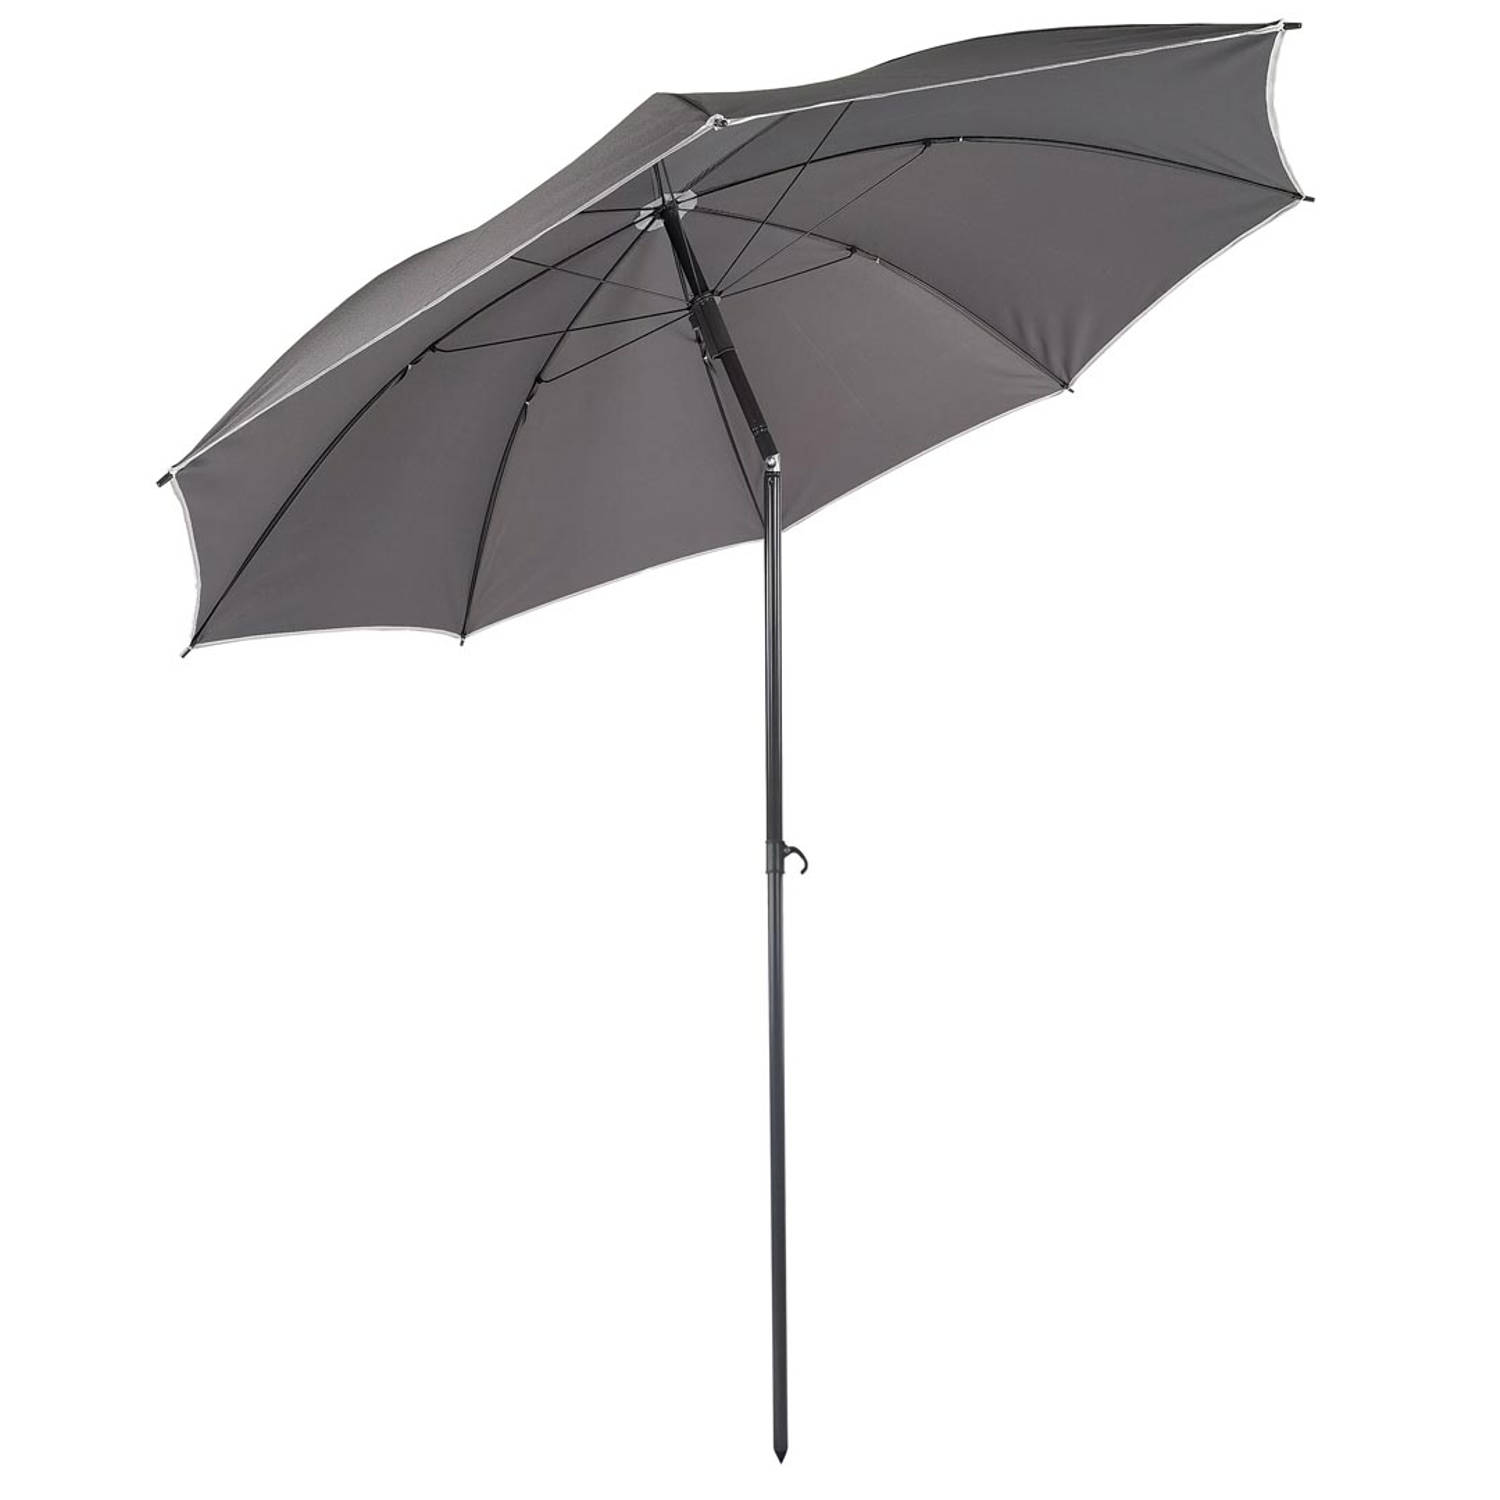 Strand parasol S Ø160cm antraciet.